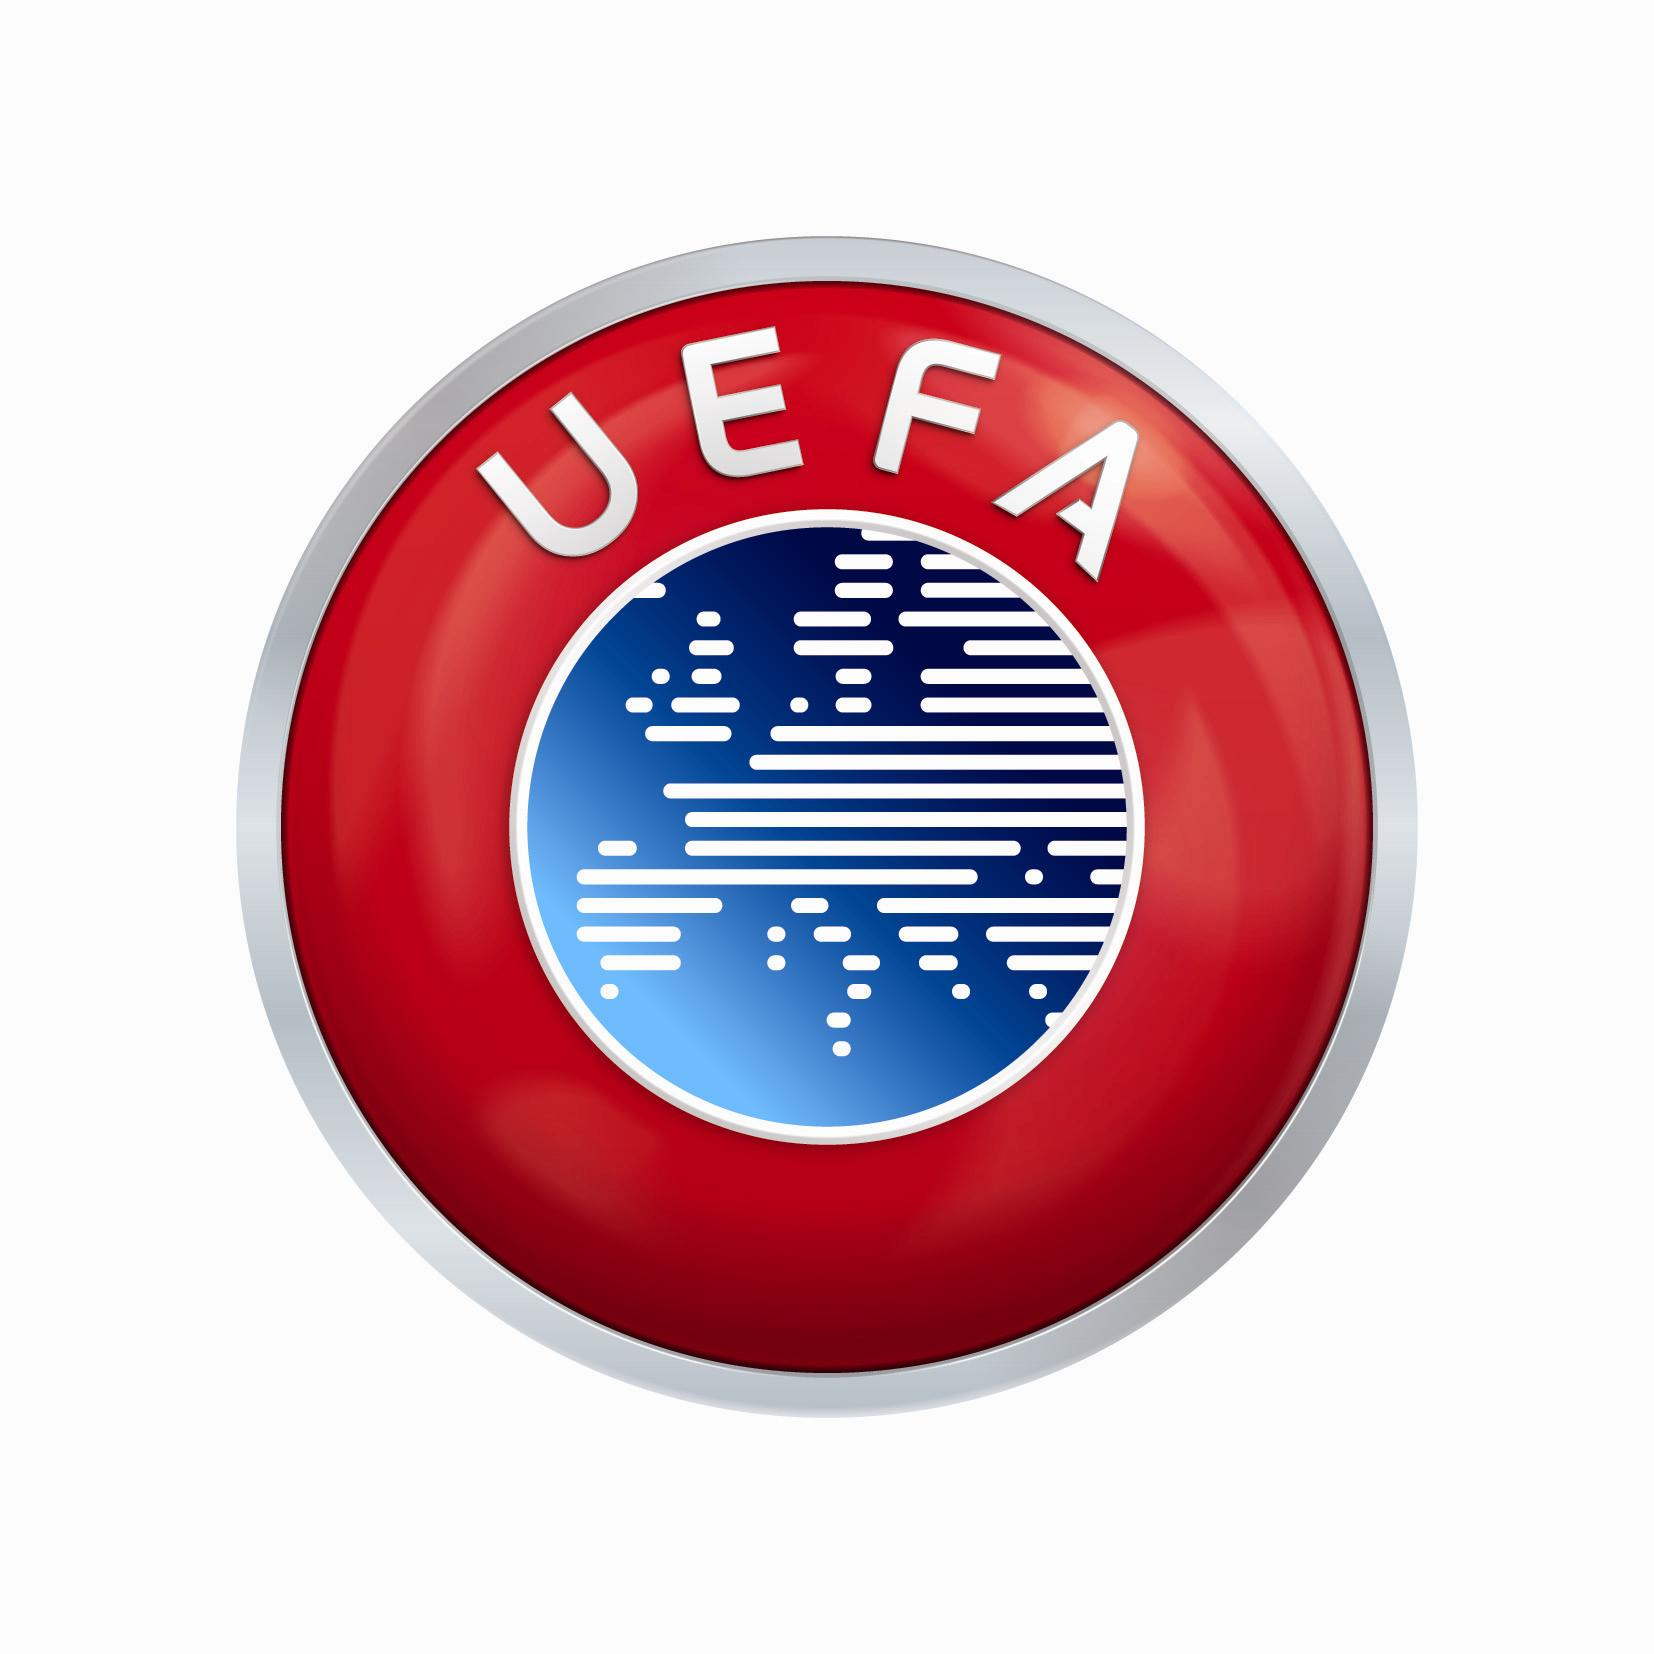 UEFA Club Logos Logos uefa quiz sports sporcle